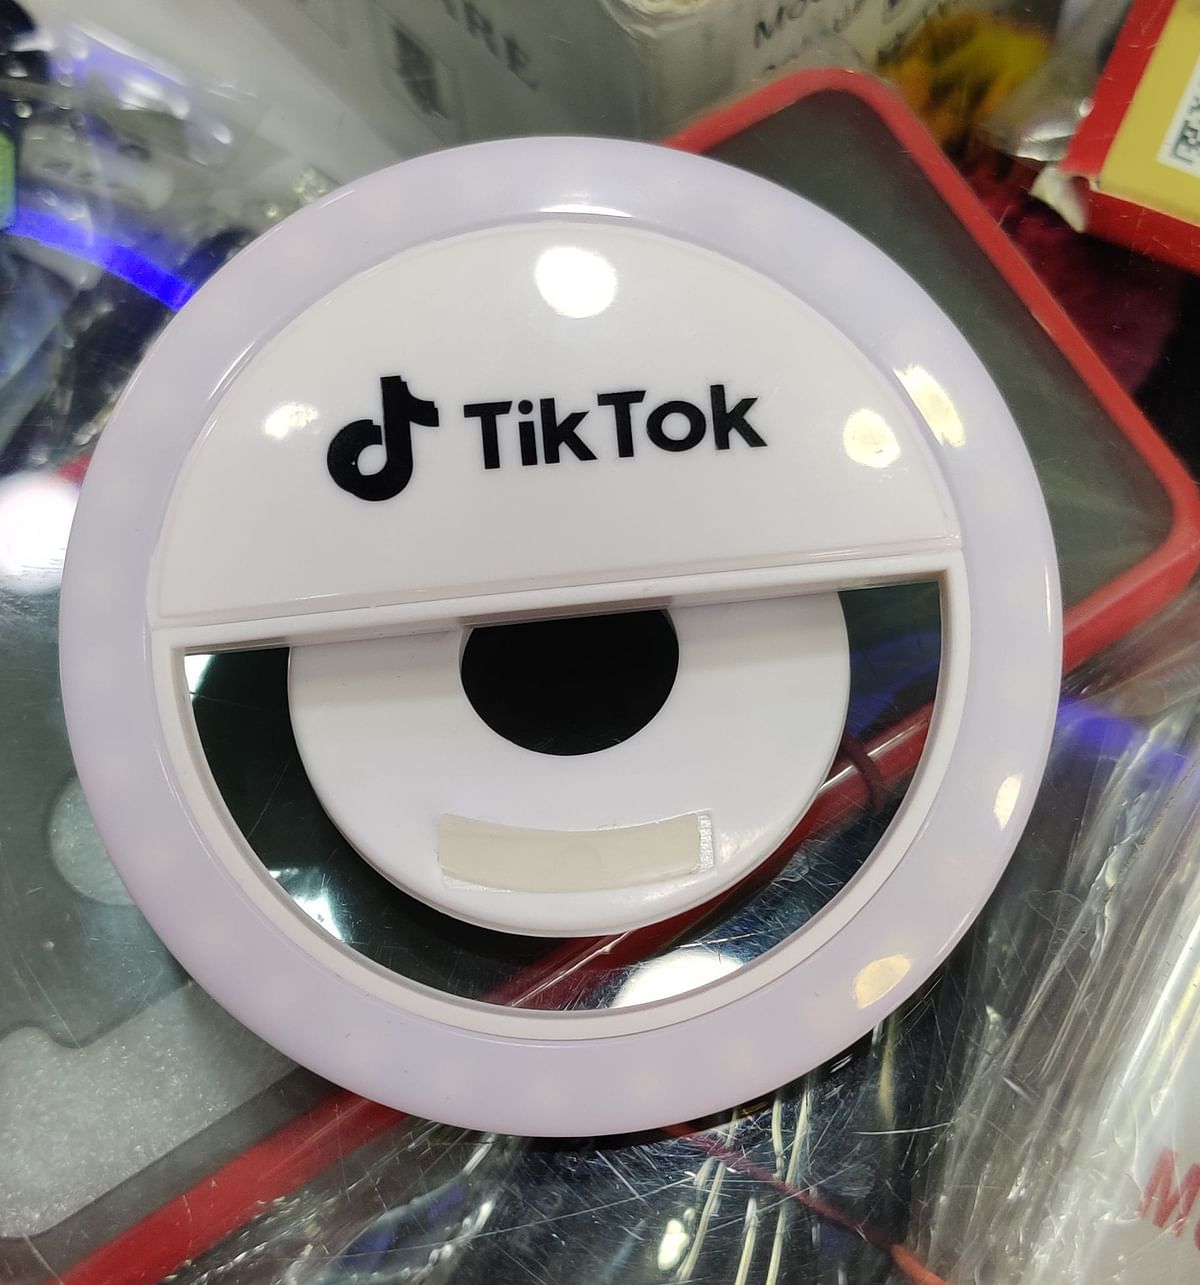 A ring light with TikTok branding on it